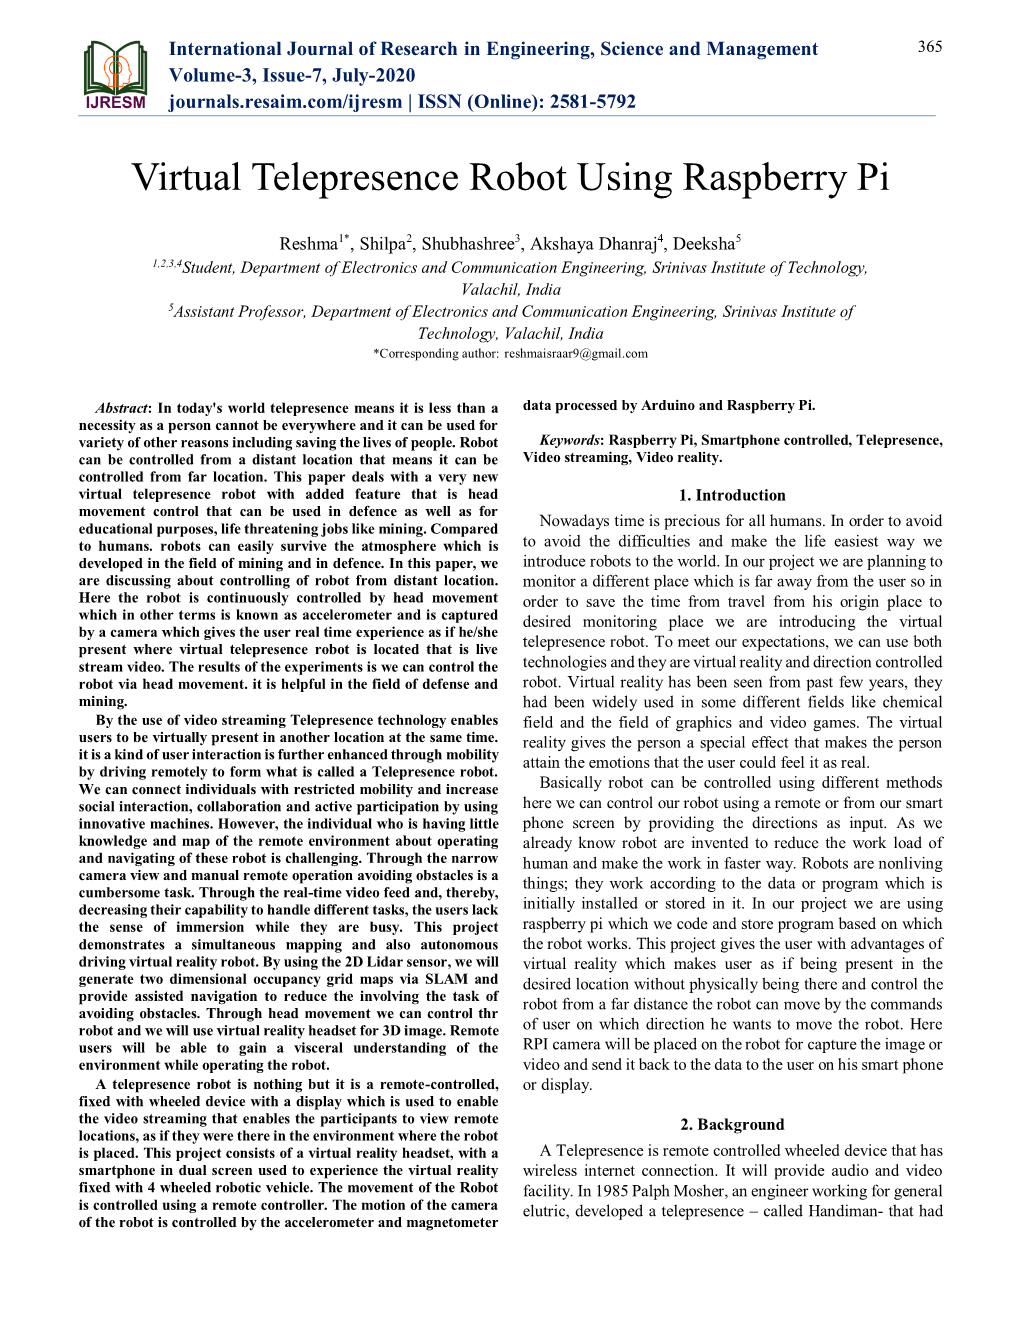 Virtual Telepresence Robot Using Raspberry Pi